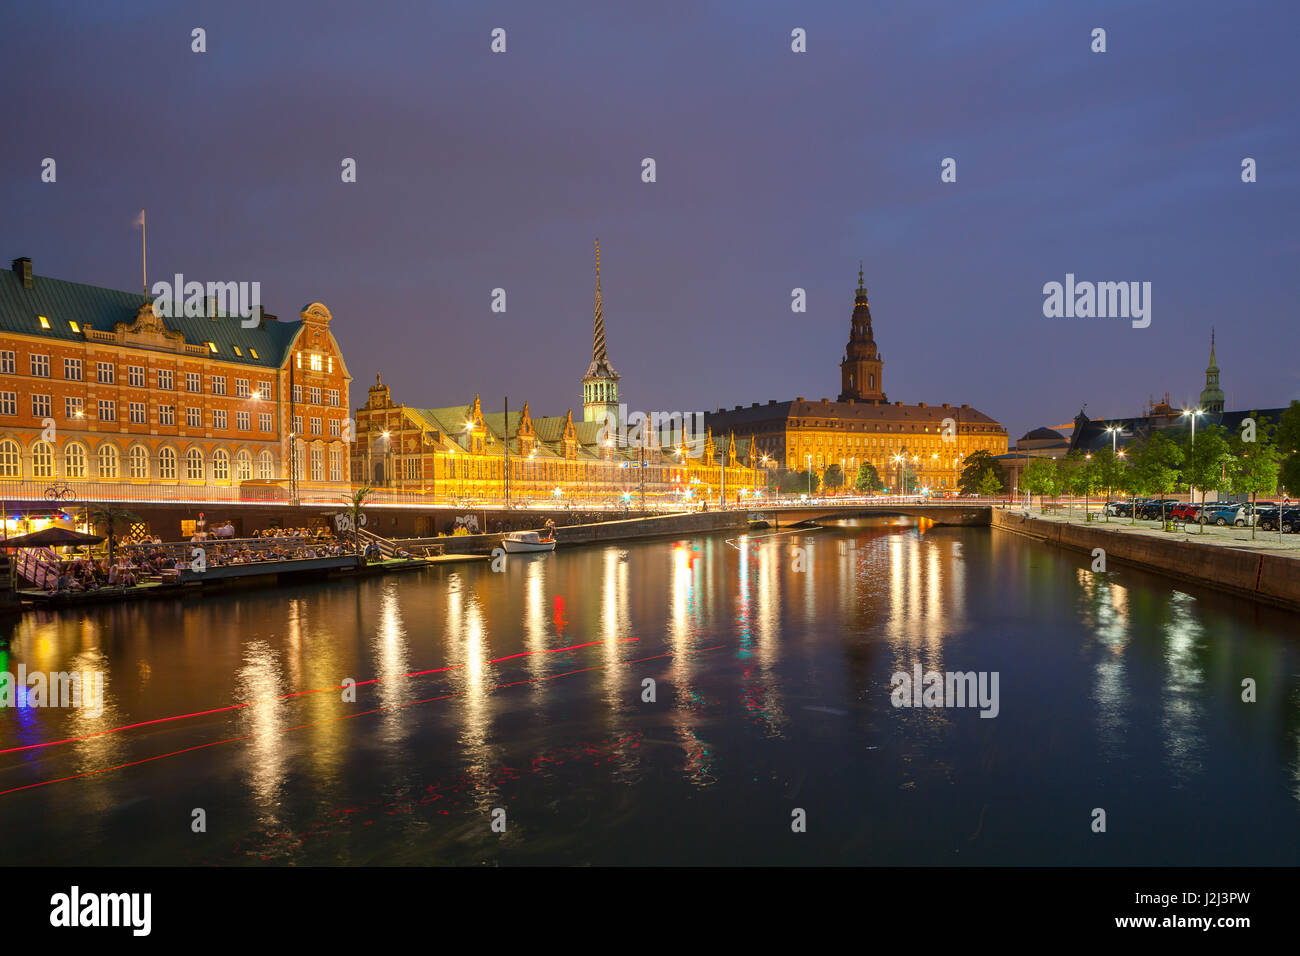 Vista nocturna de Christiansborg Palace y el edificio de la Bolsa a través del canal en Copenhague. Foto de stock